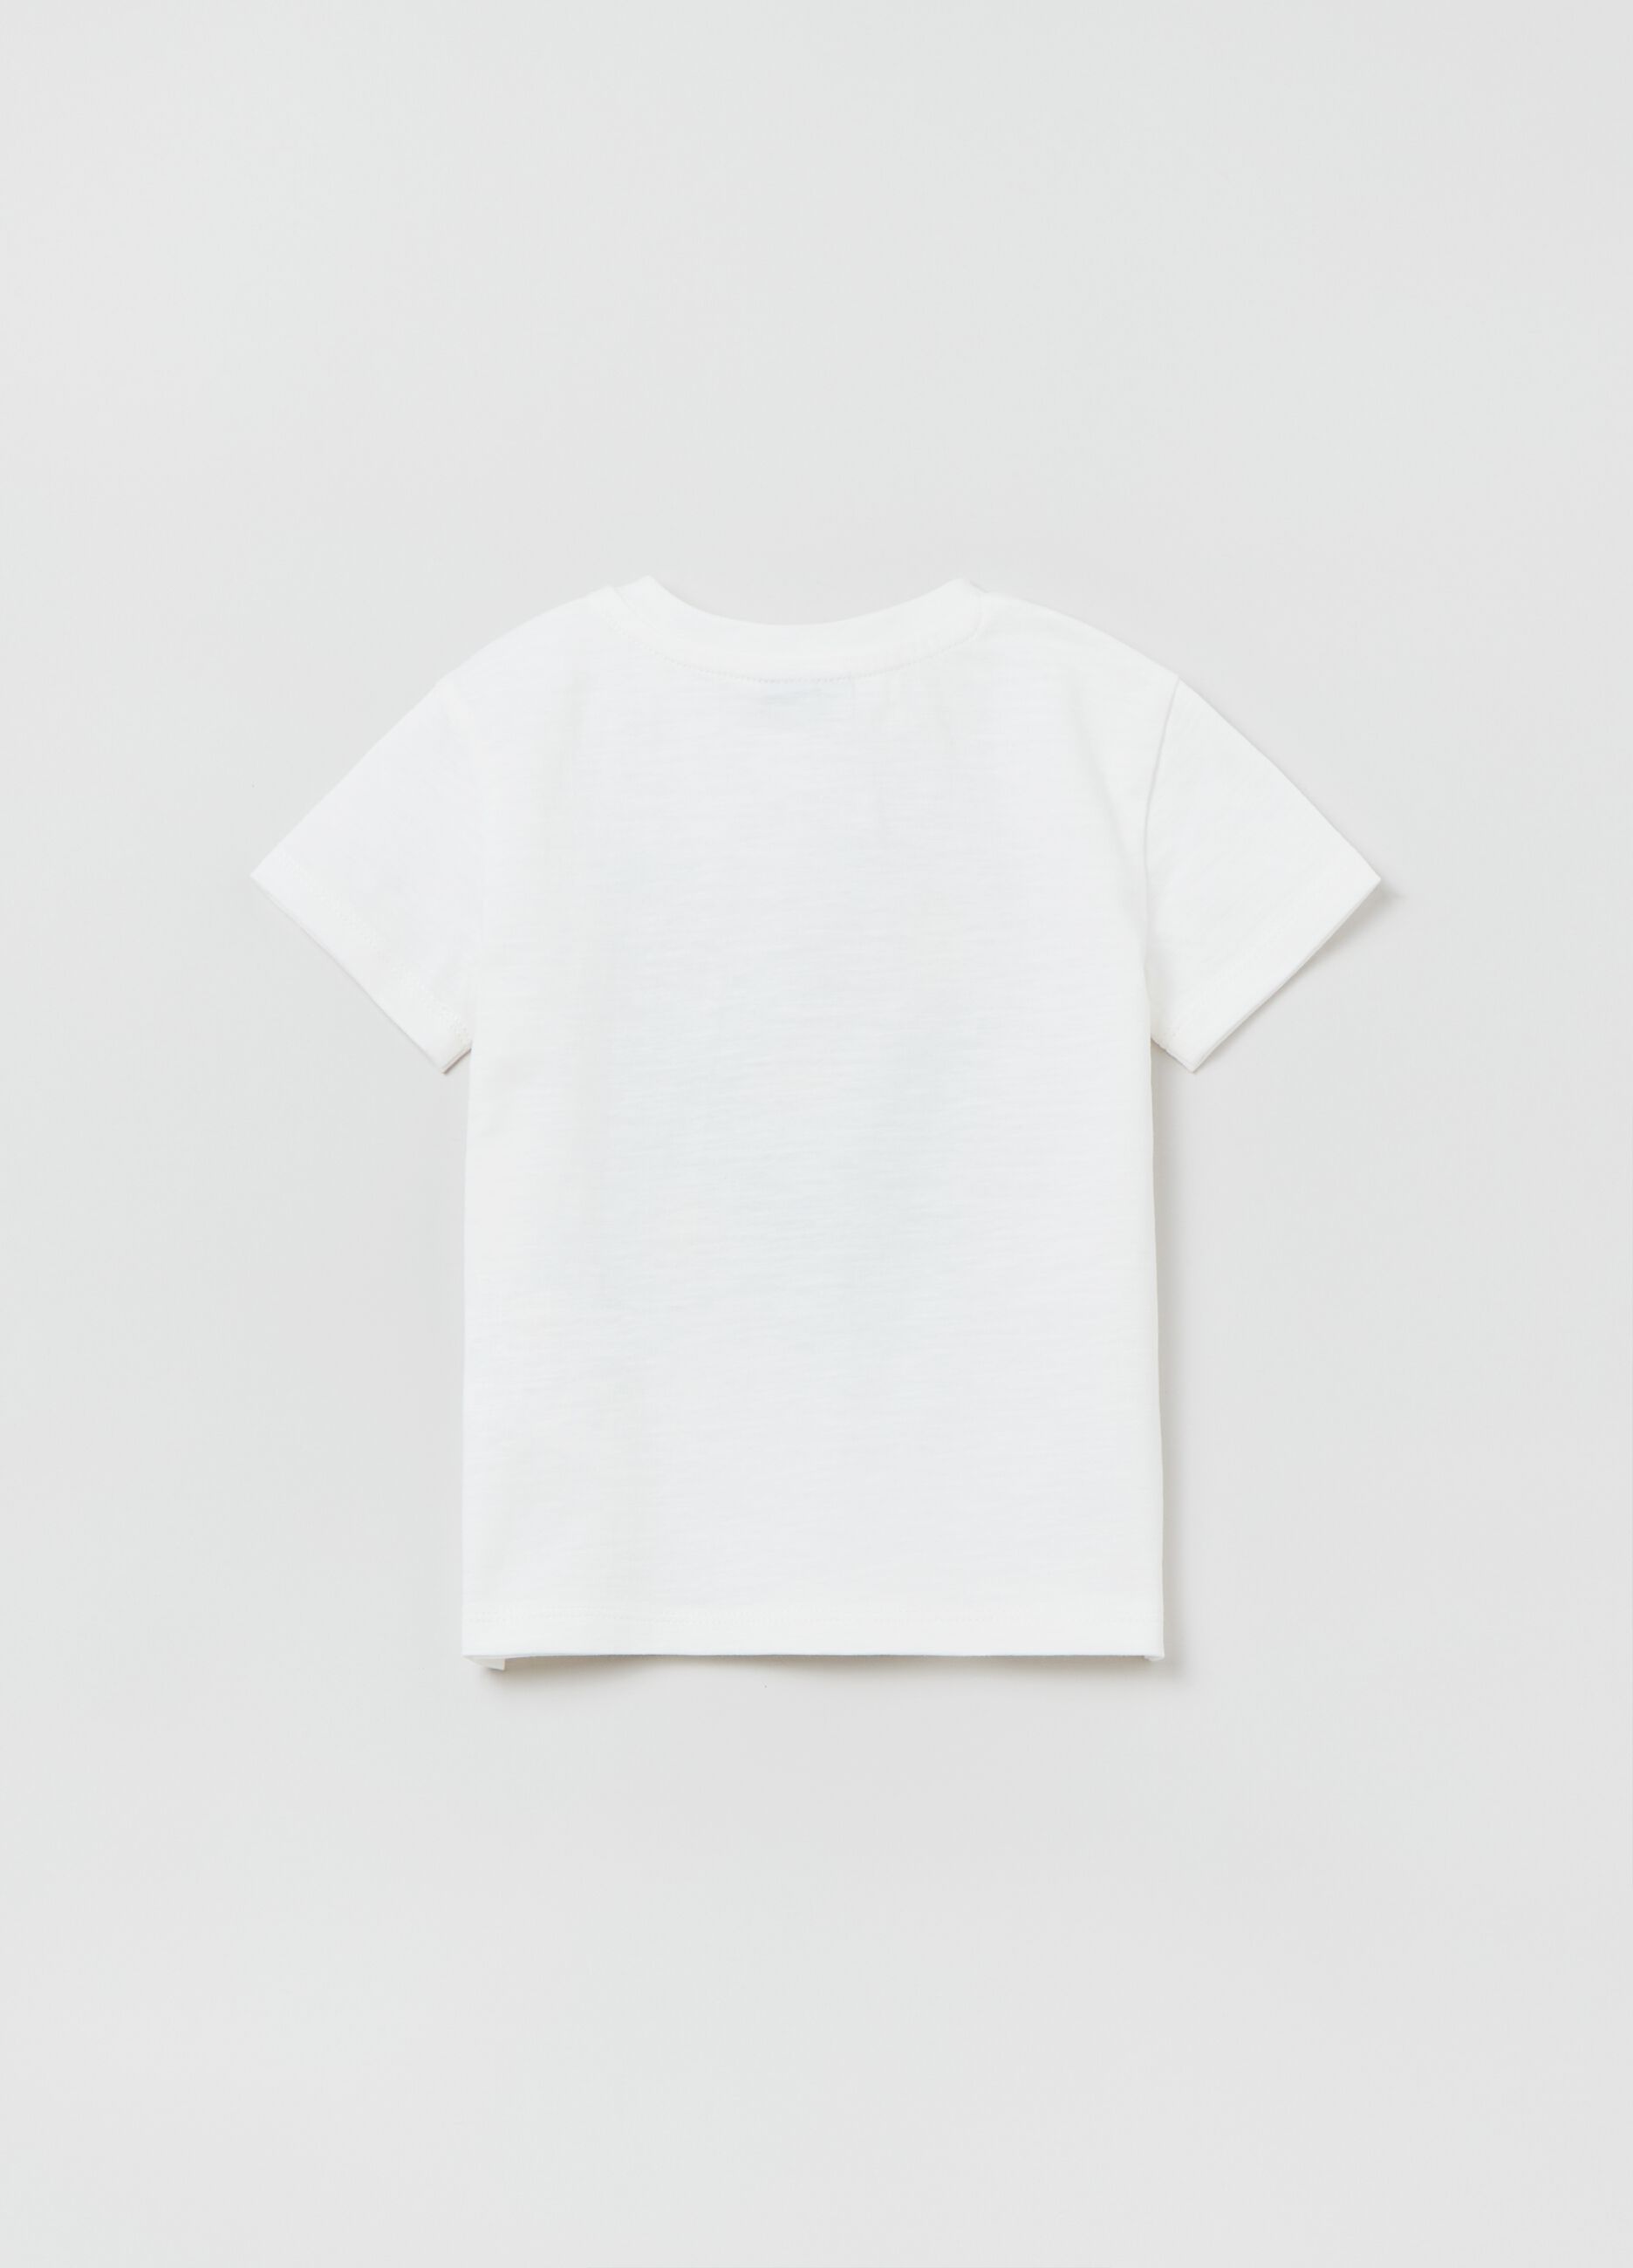 Cotton slub T-shirt with animals print